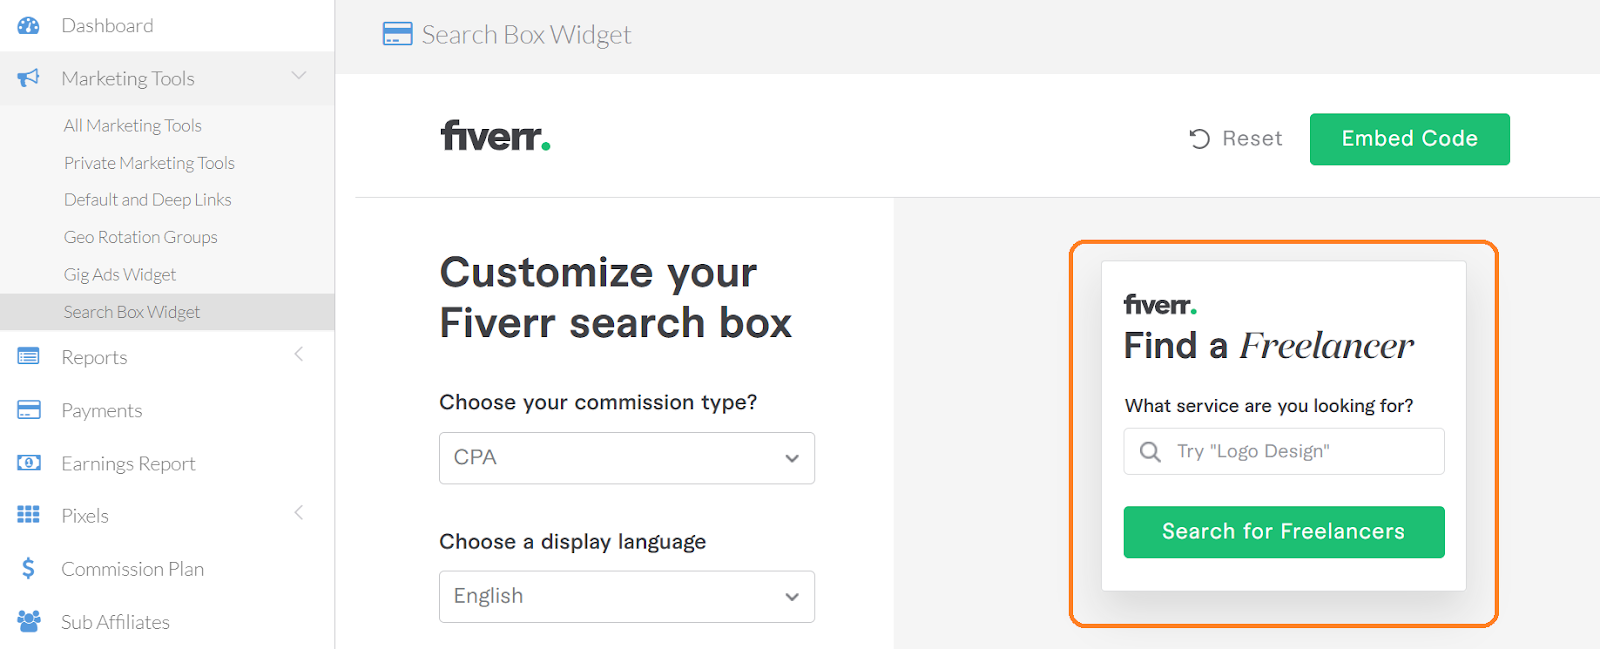 fiverr affiliate program search box widget